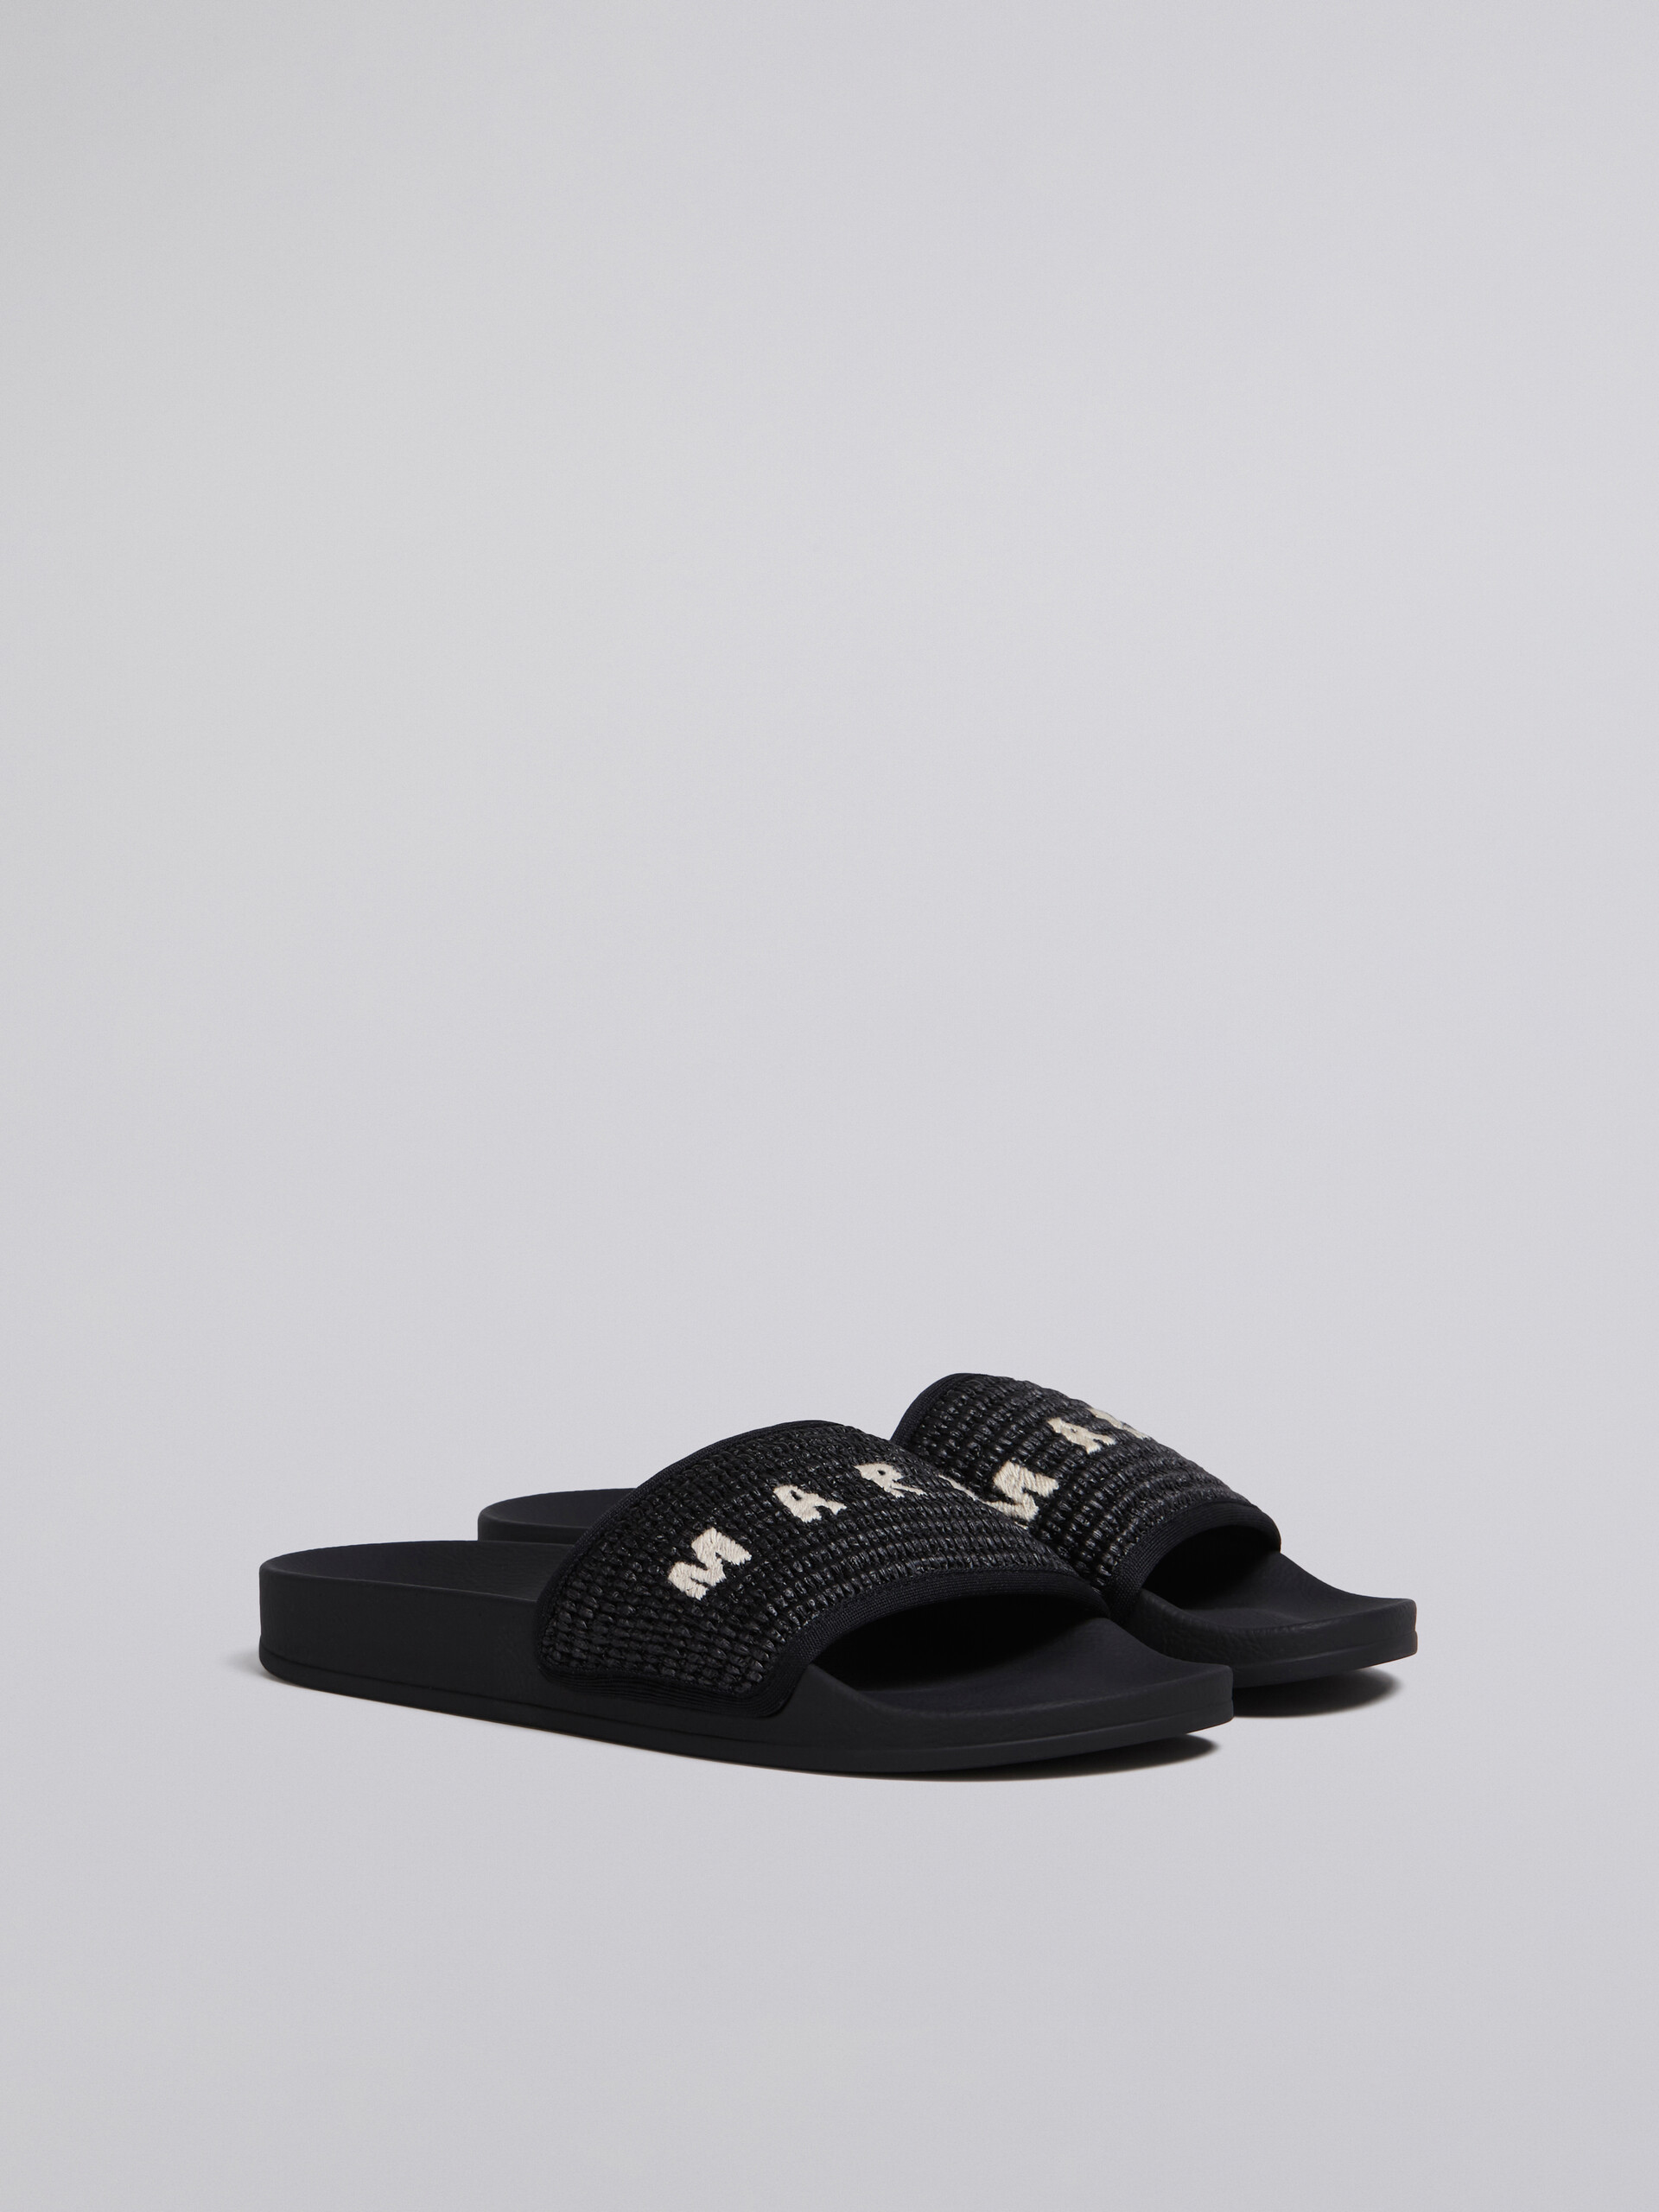 Black raffia sandal - Sandals - Image 2